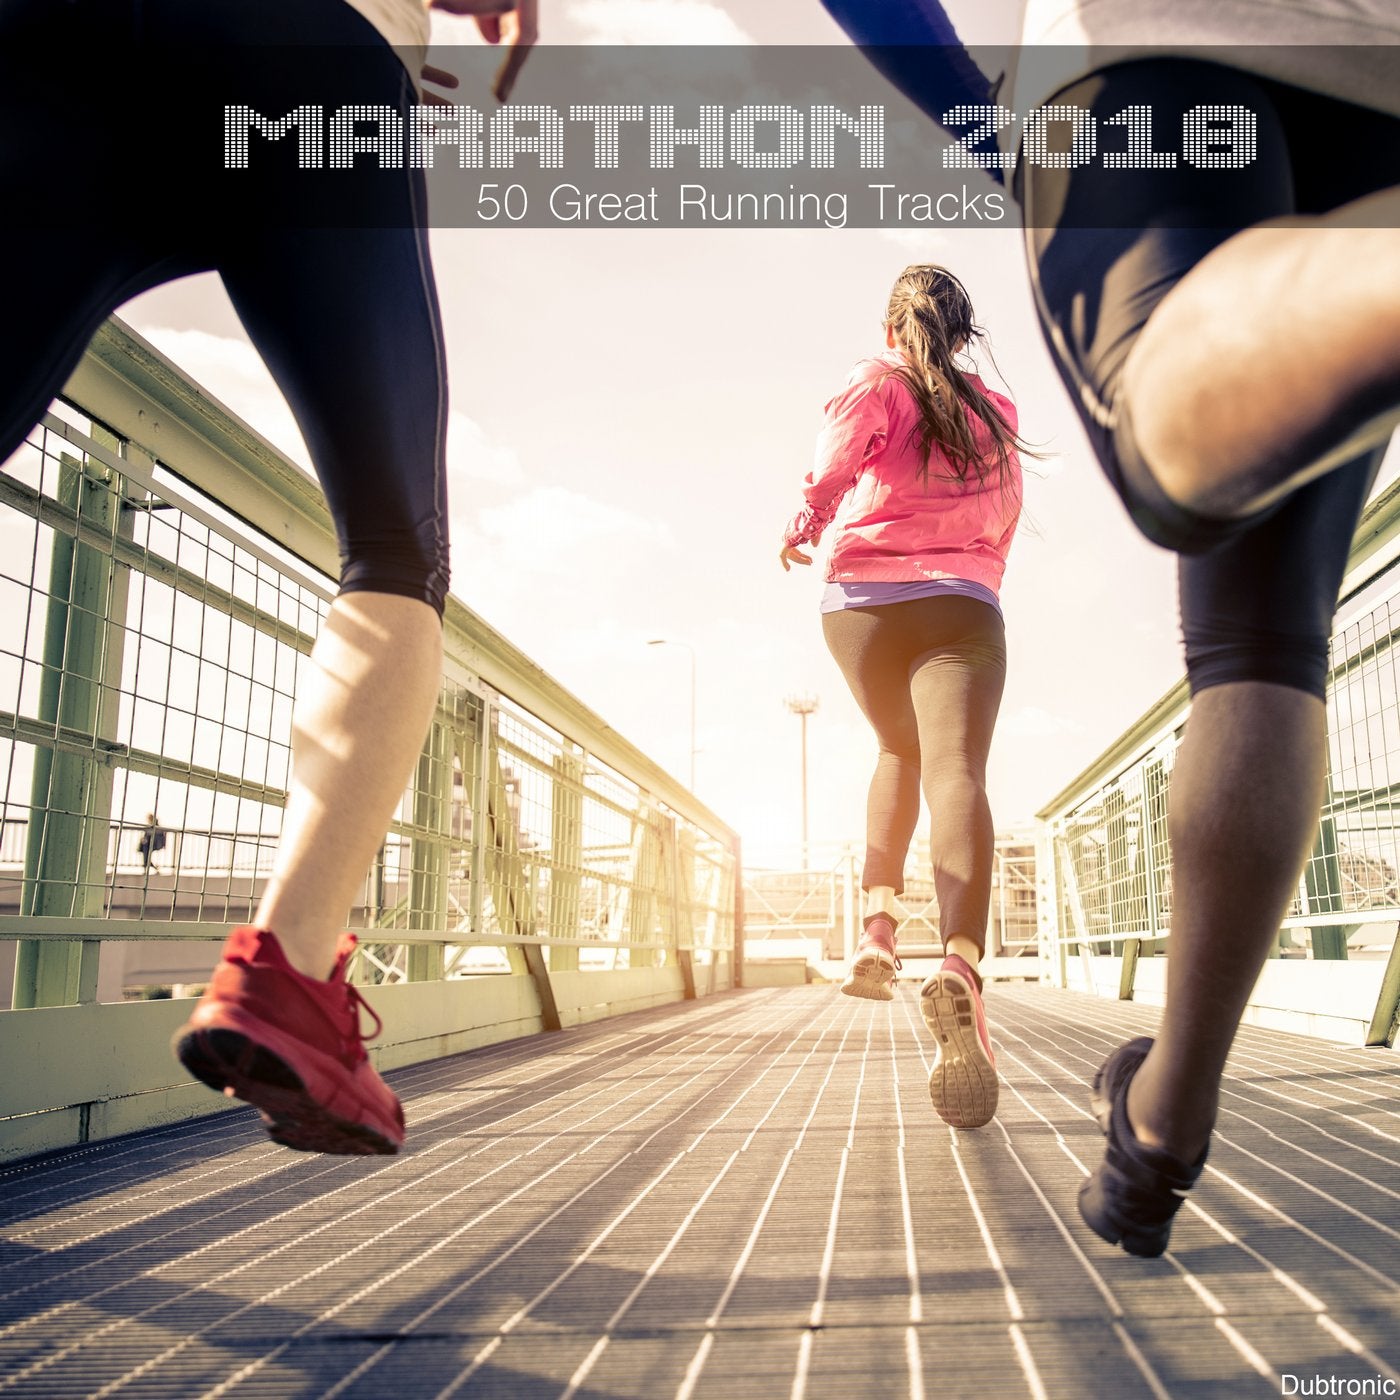 Marathon 2018: 50 Great Running Tracks